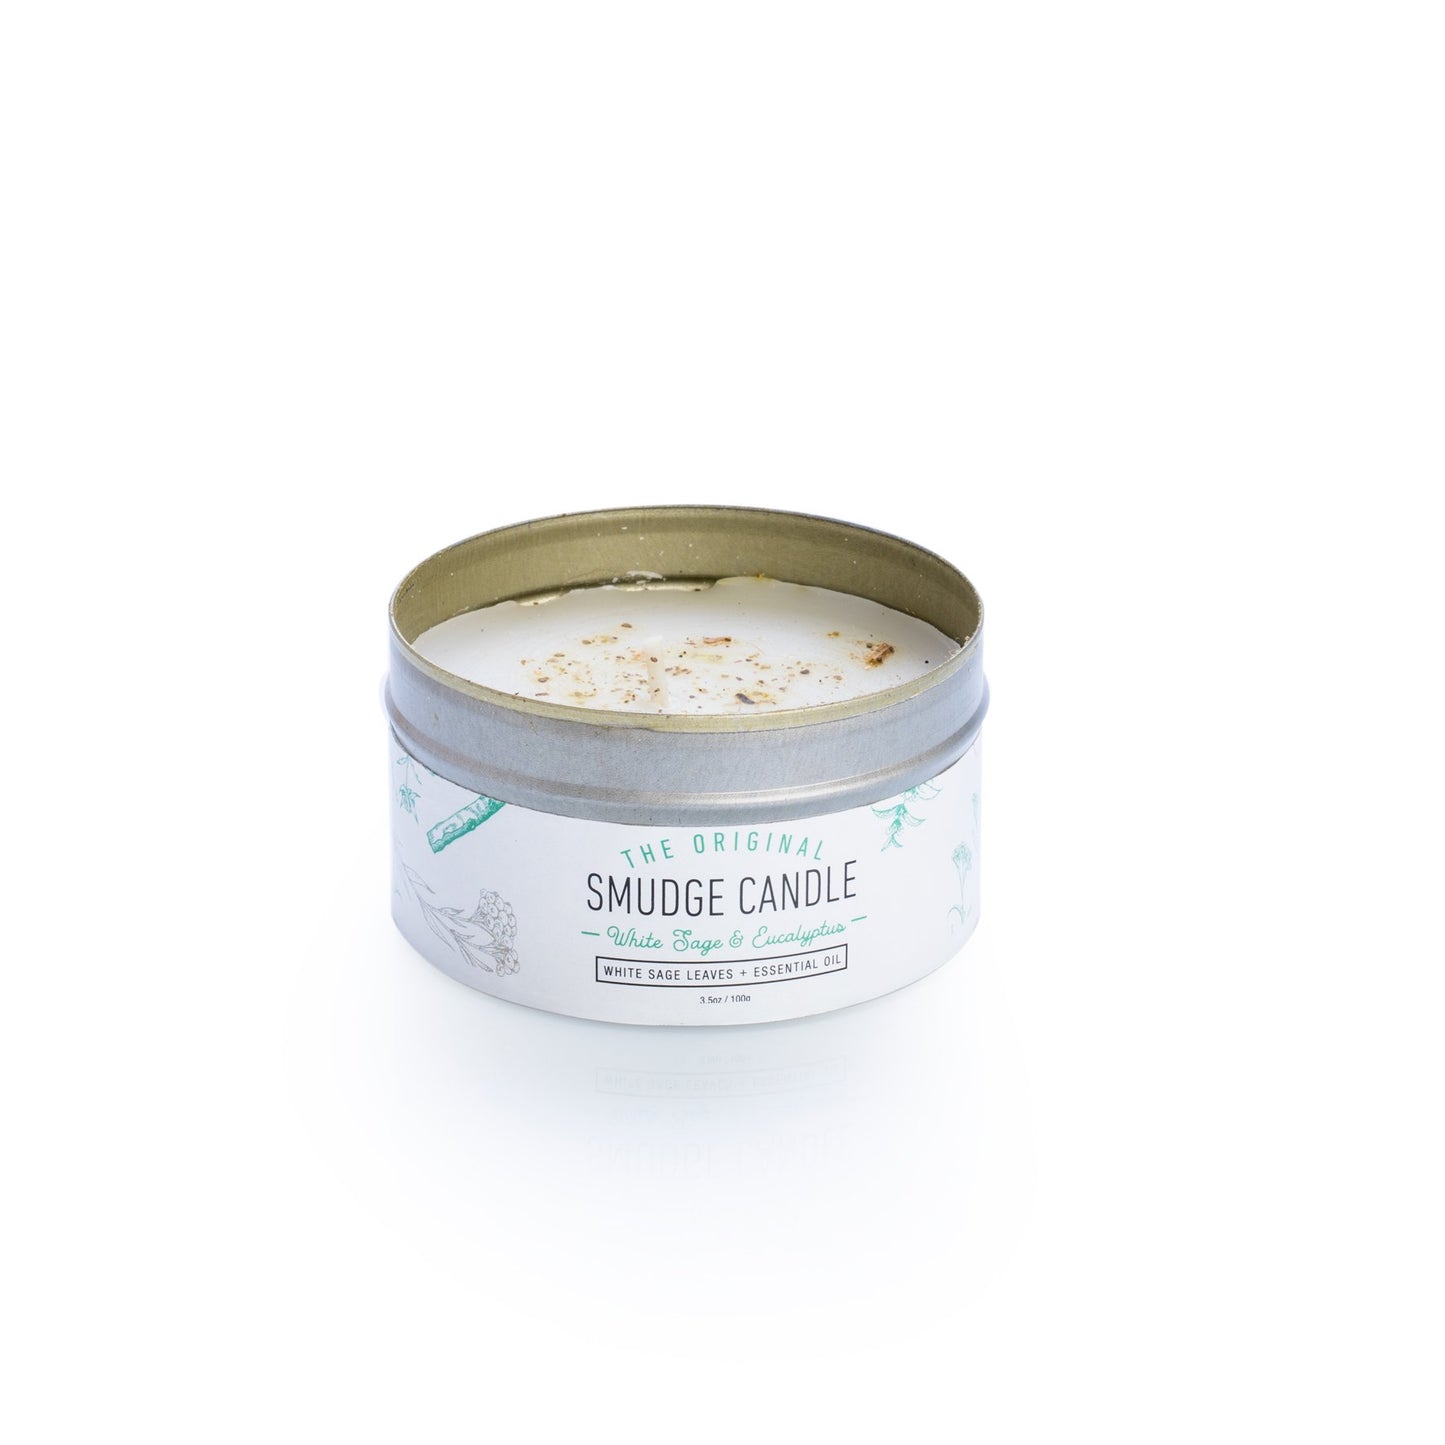 Smudge candle - white sage & eucalyptus - Rivendell Shop